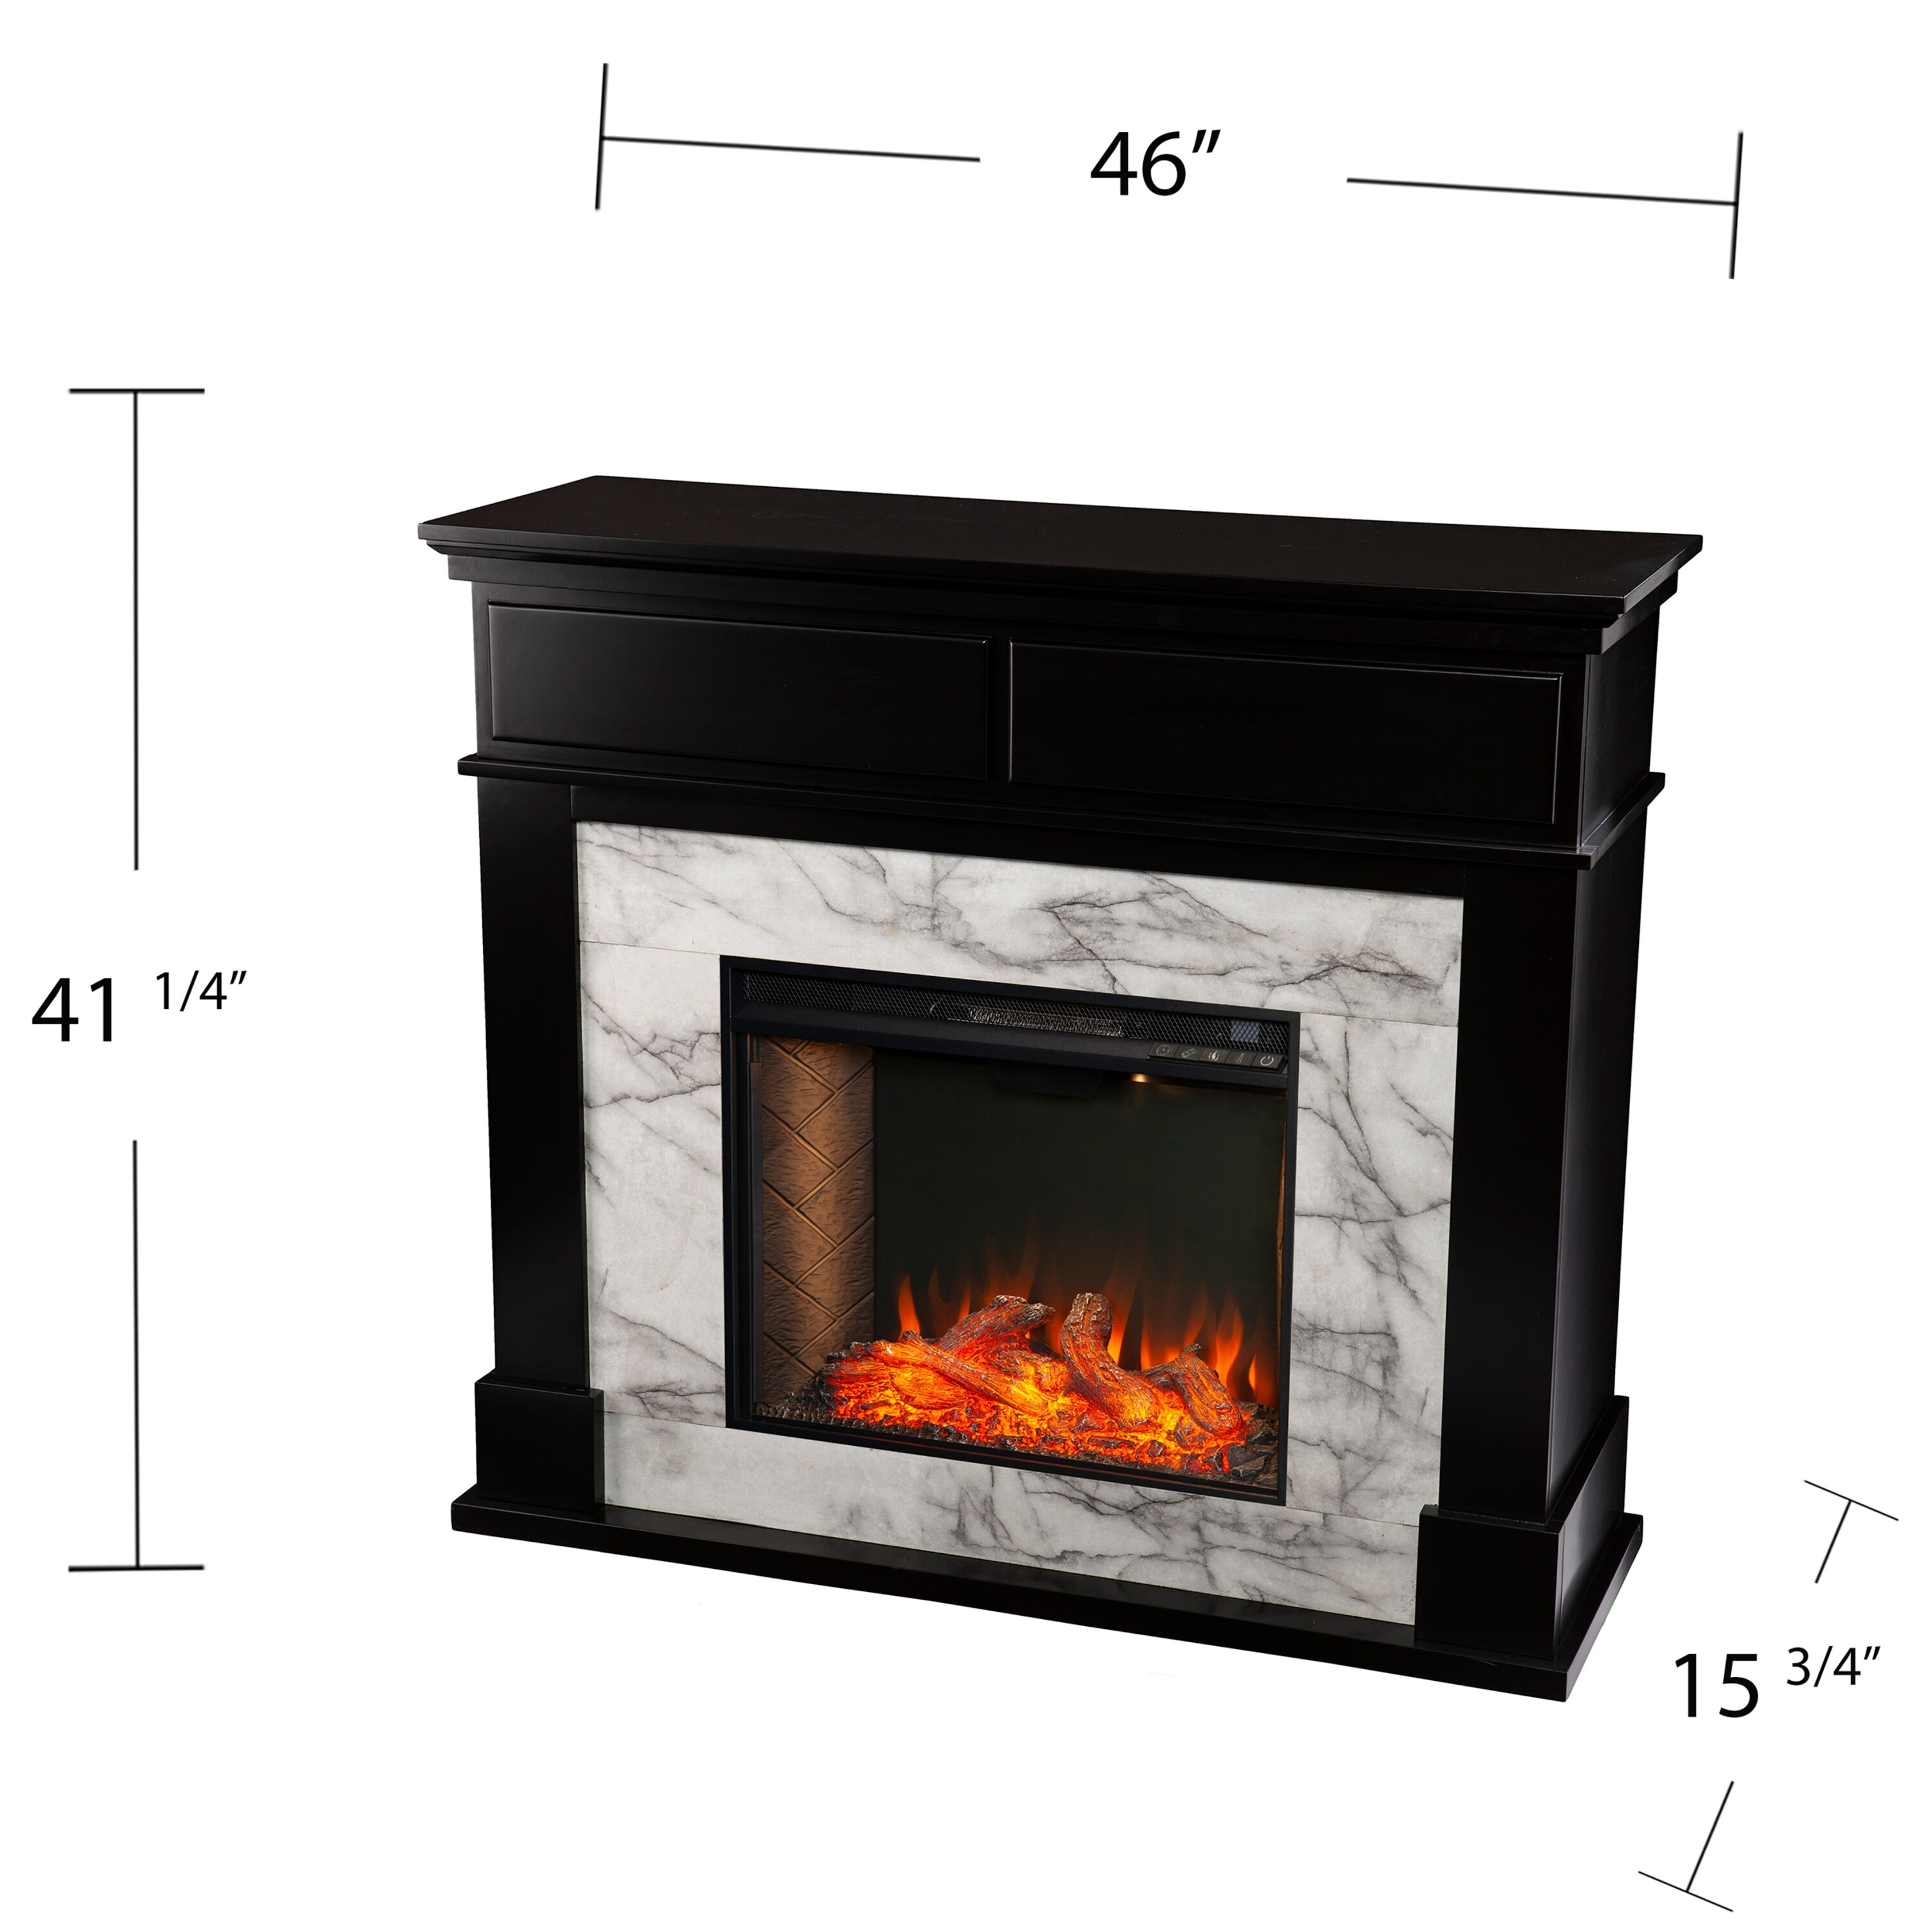 SEI Furniture Panamint Black Wood Alexa-Enabled Electric Fireplace